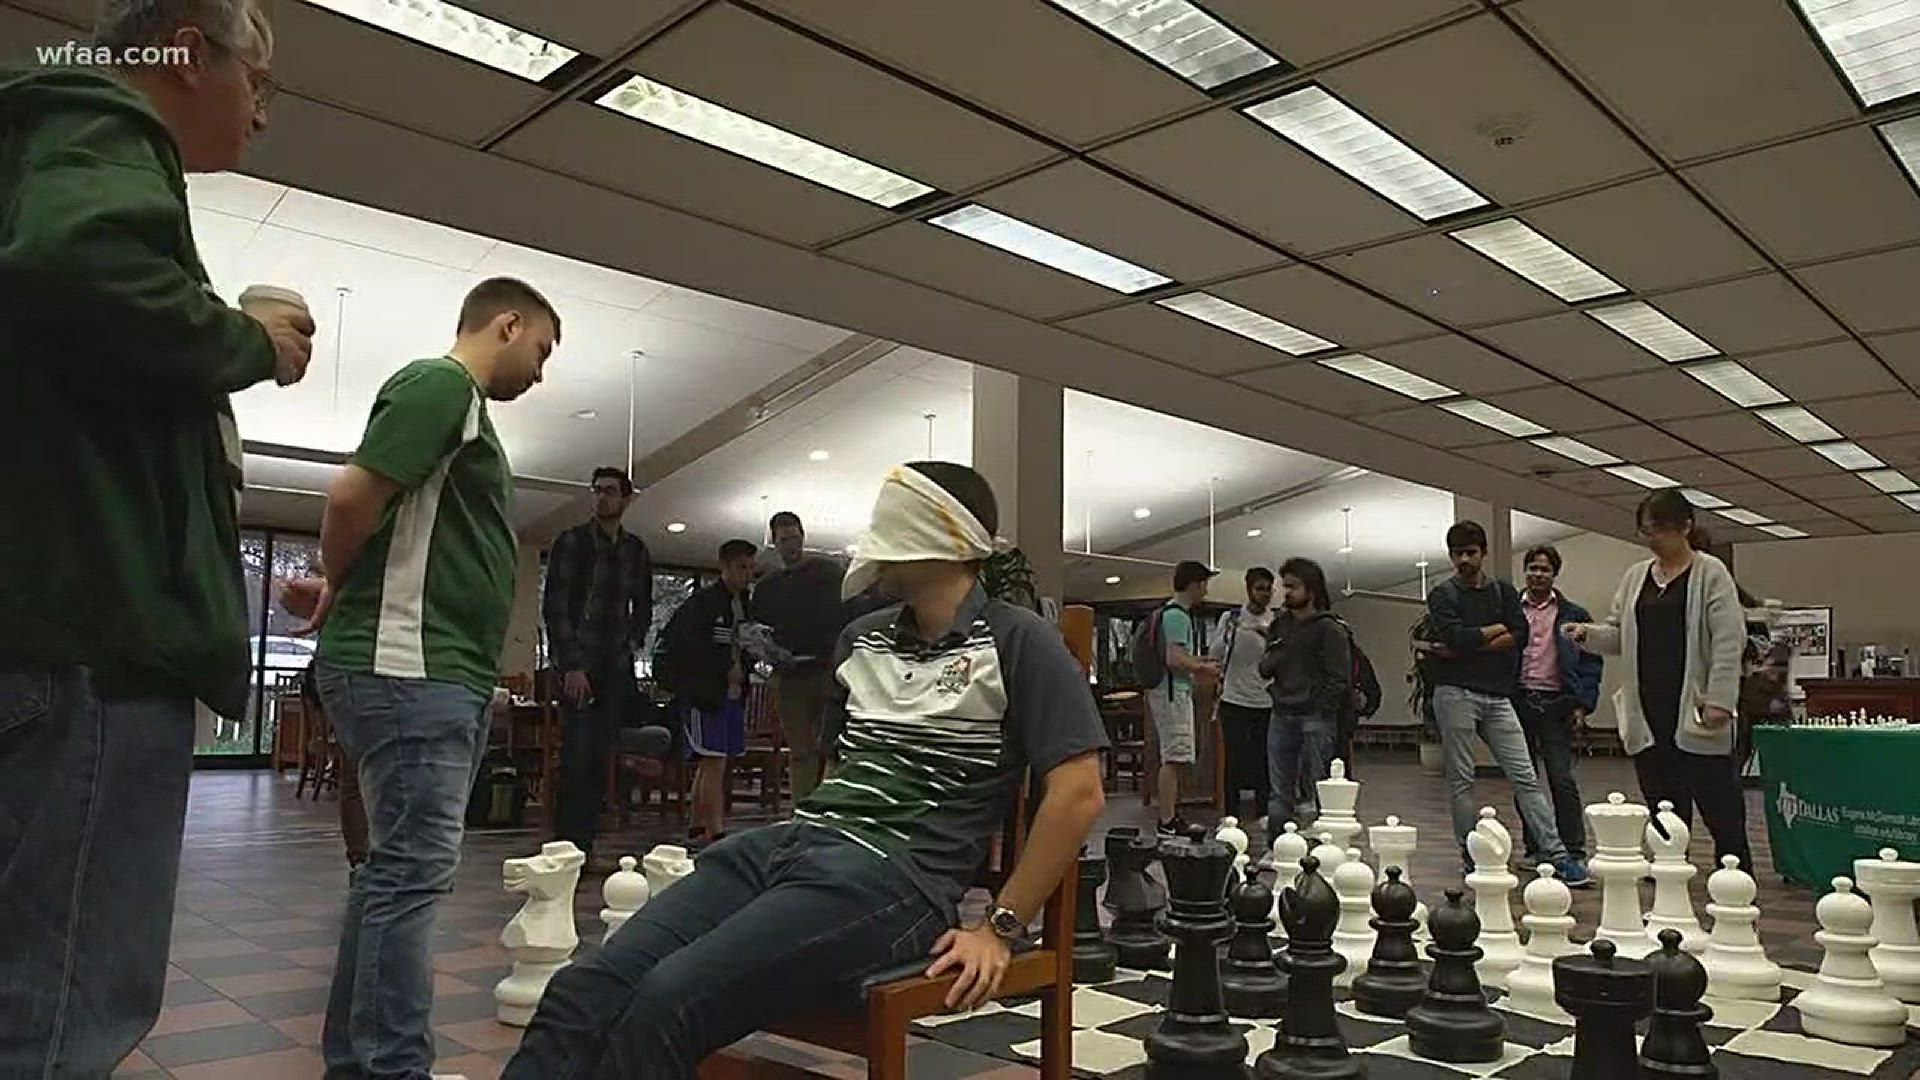 UTD grandmaster chess players challenge students blindfolded